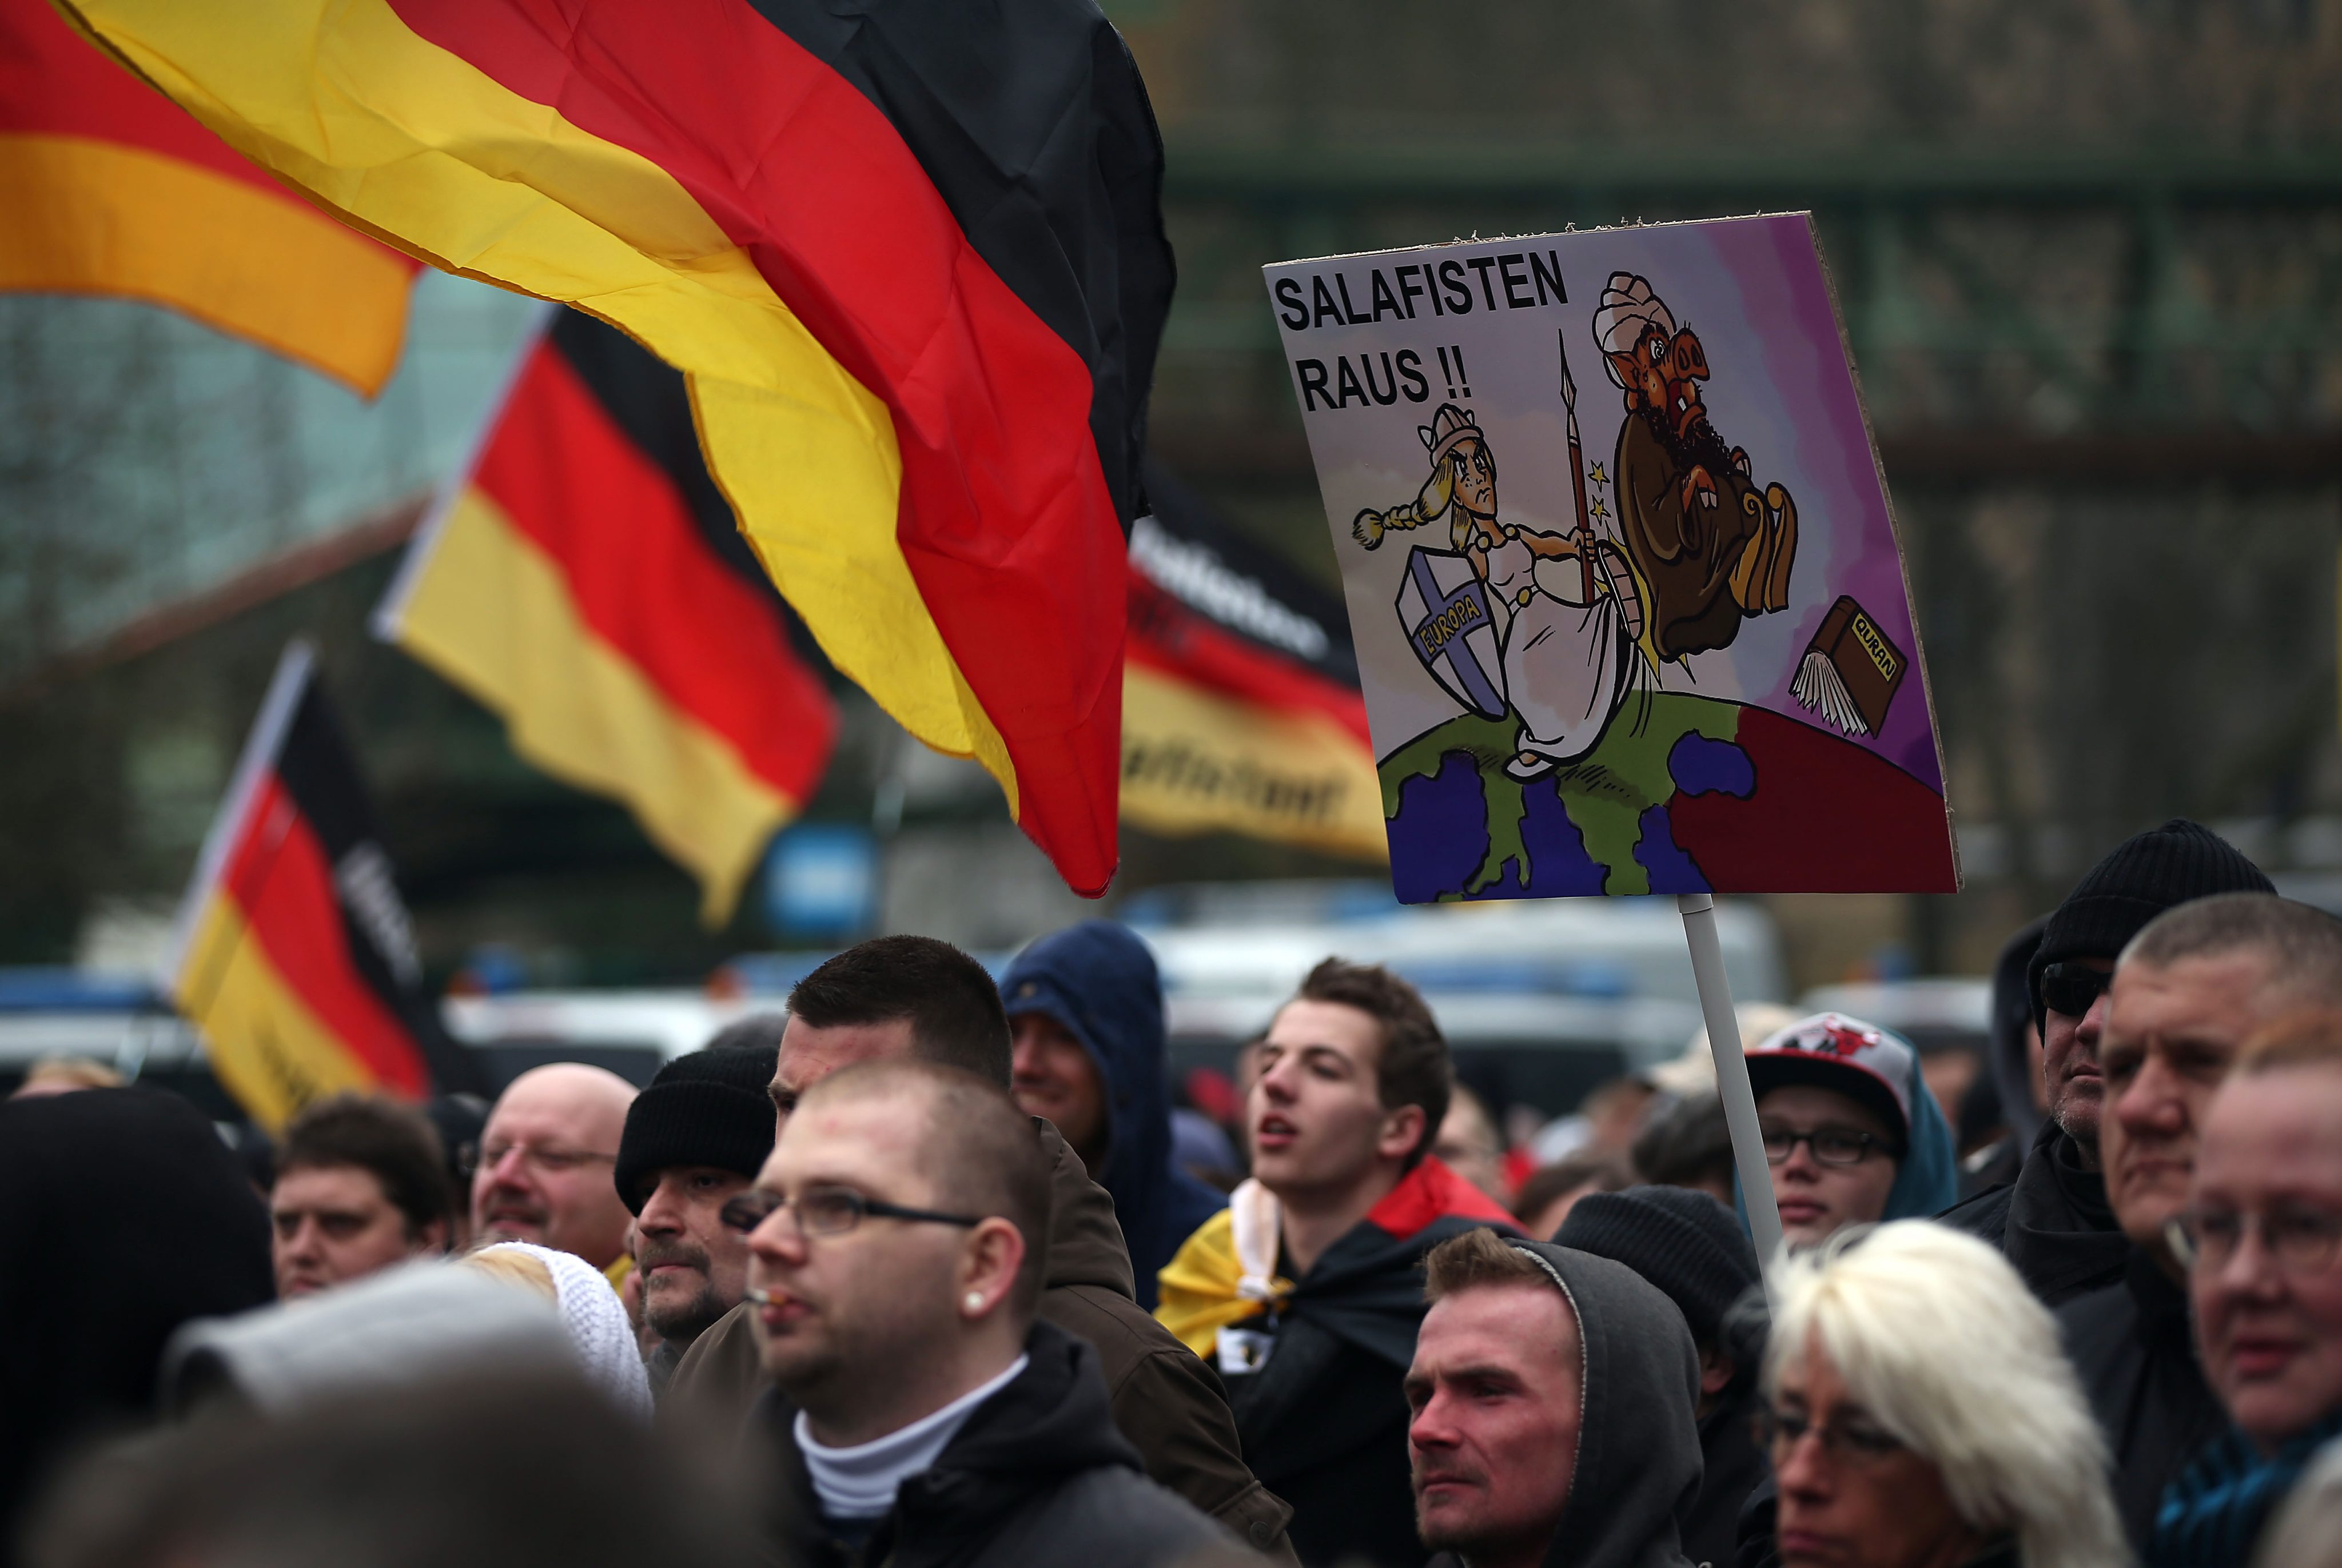 The Washington Post: How Putin “entered” German politics